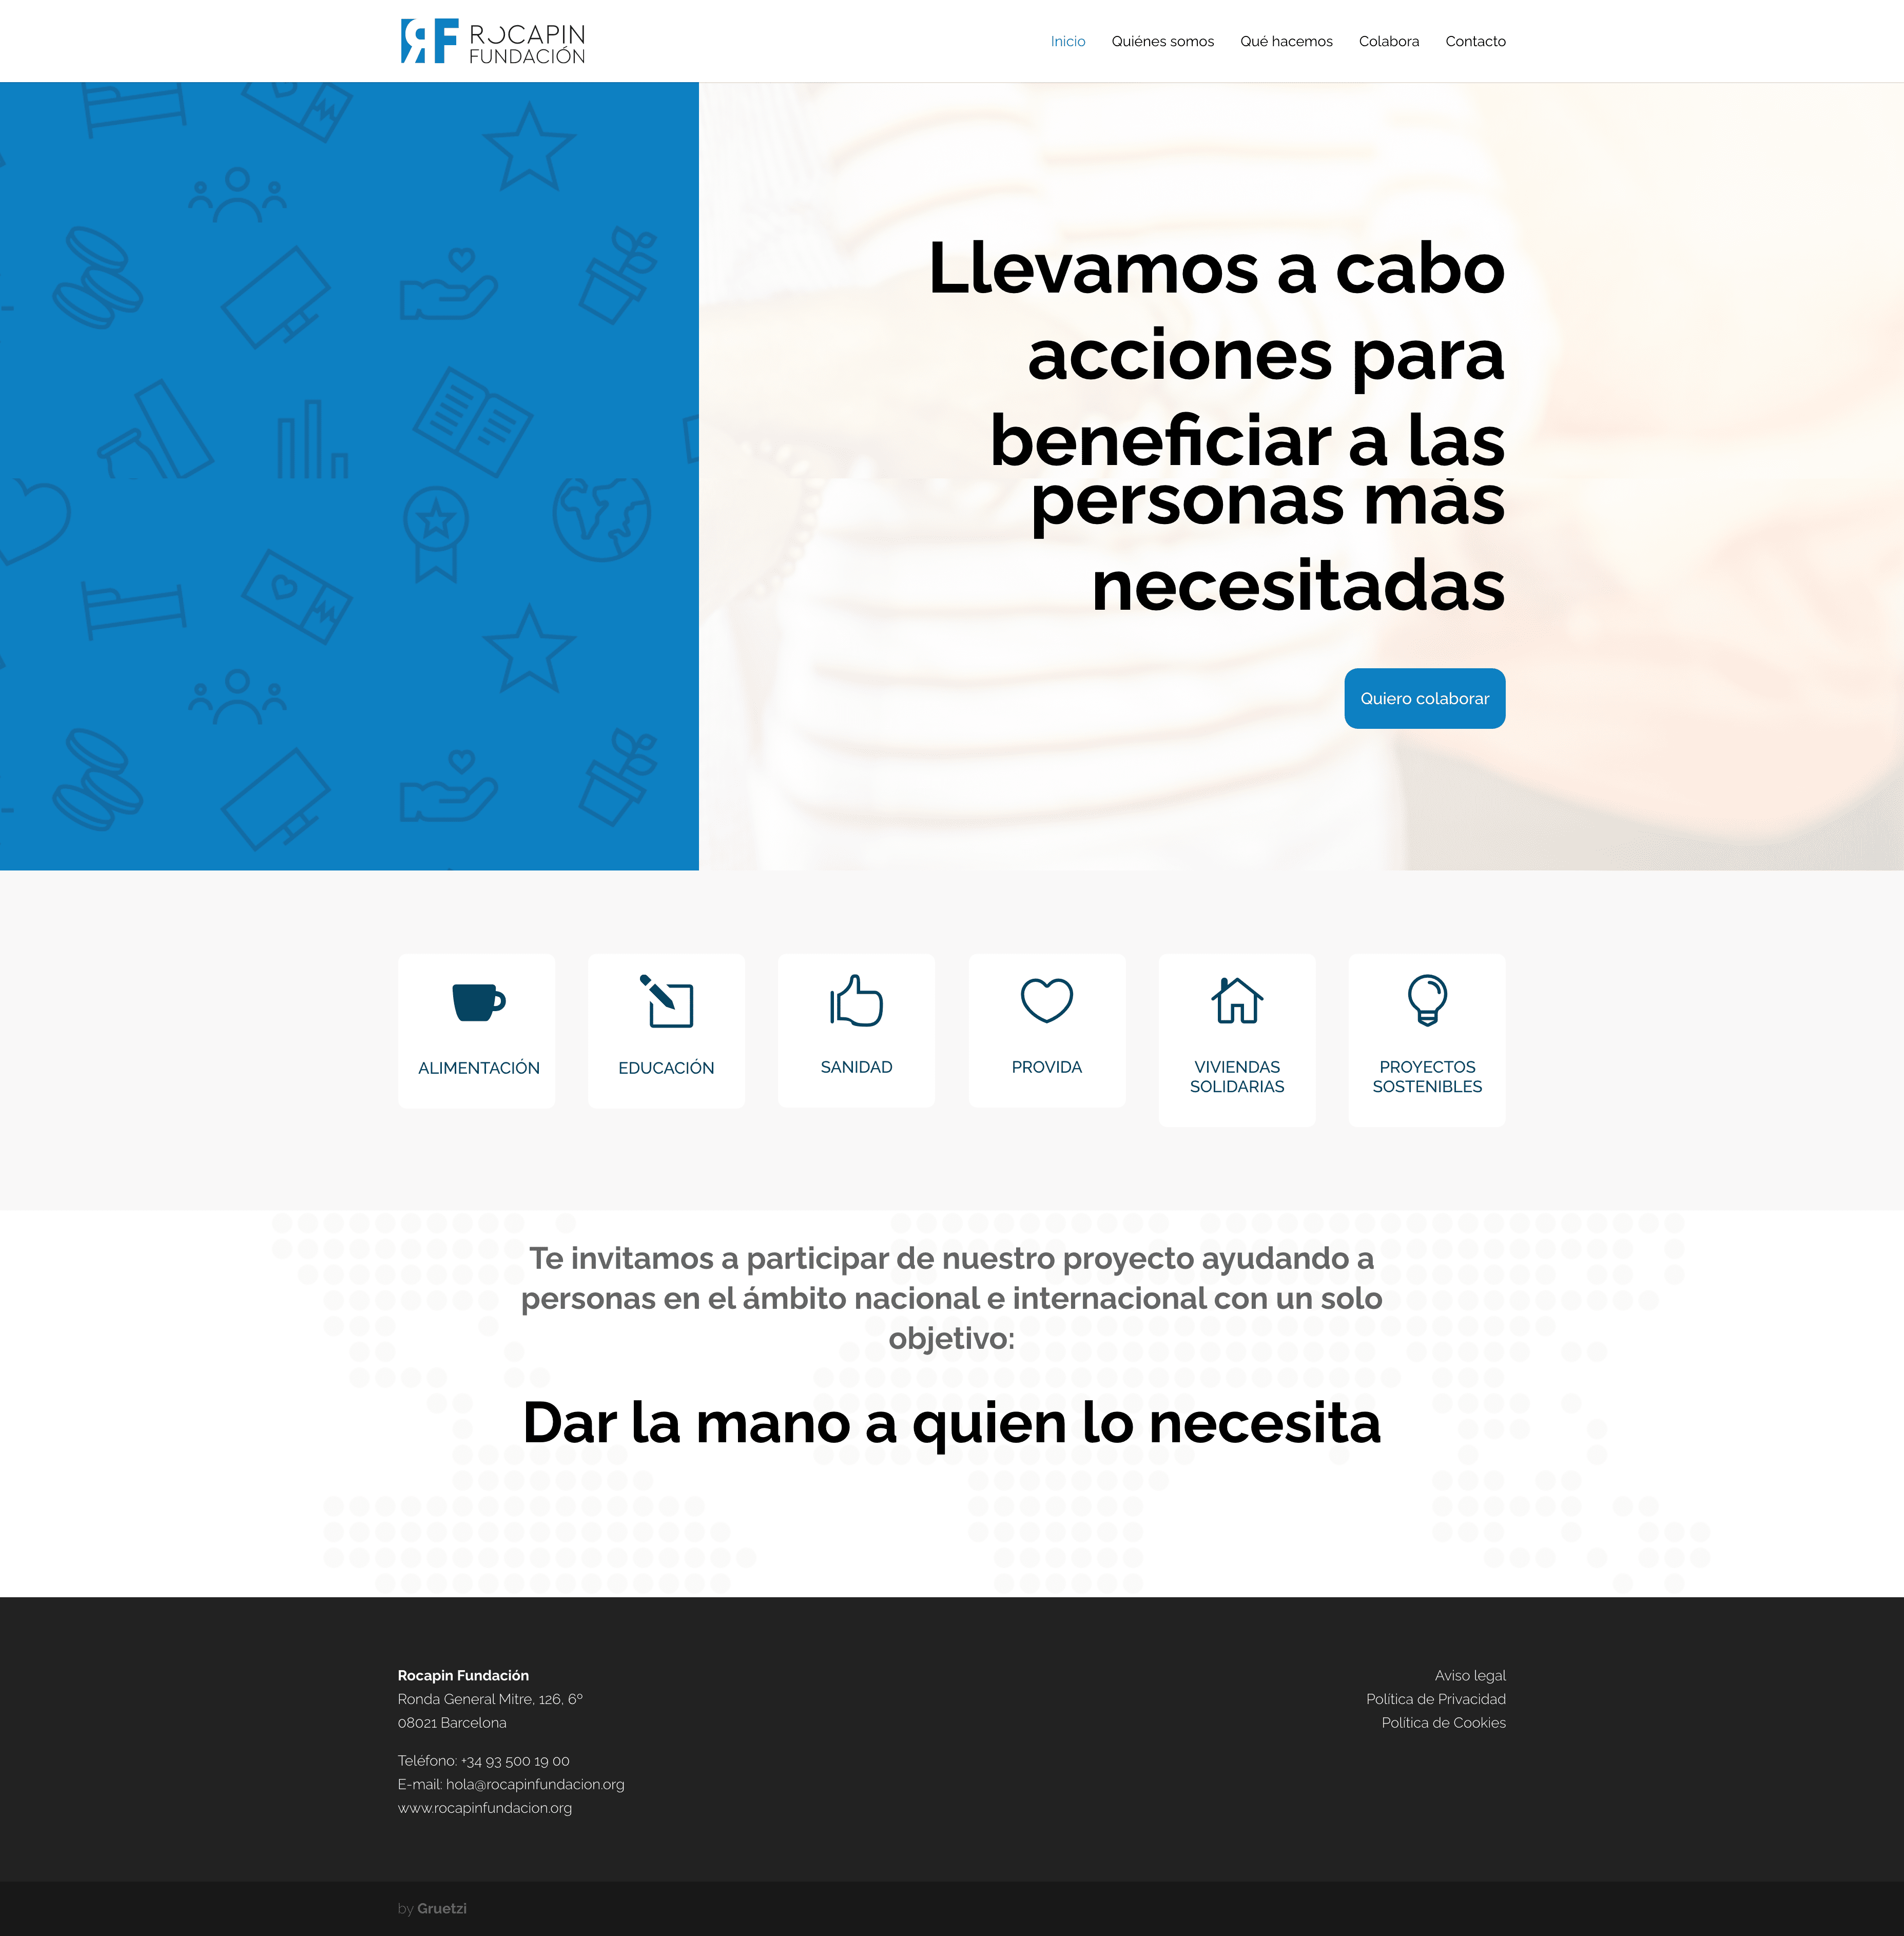 dissenyadors-web-barcelona-rocapin-fundacion-gruetzi